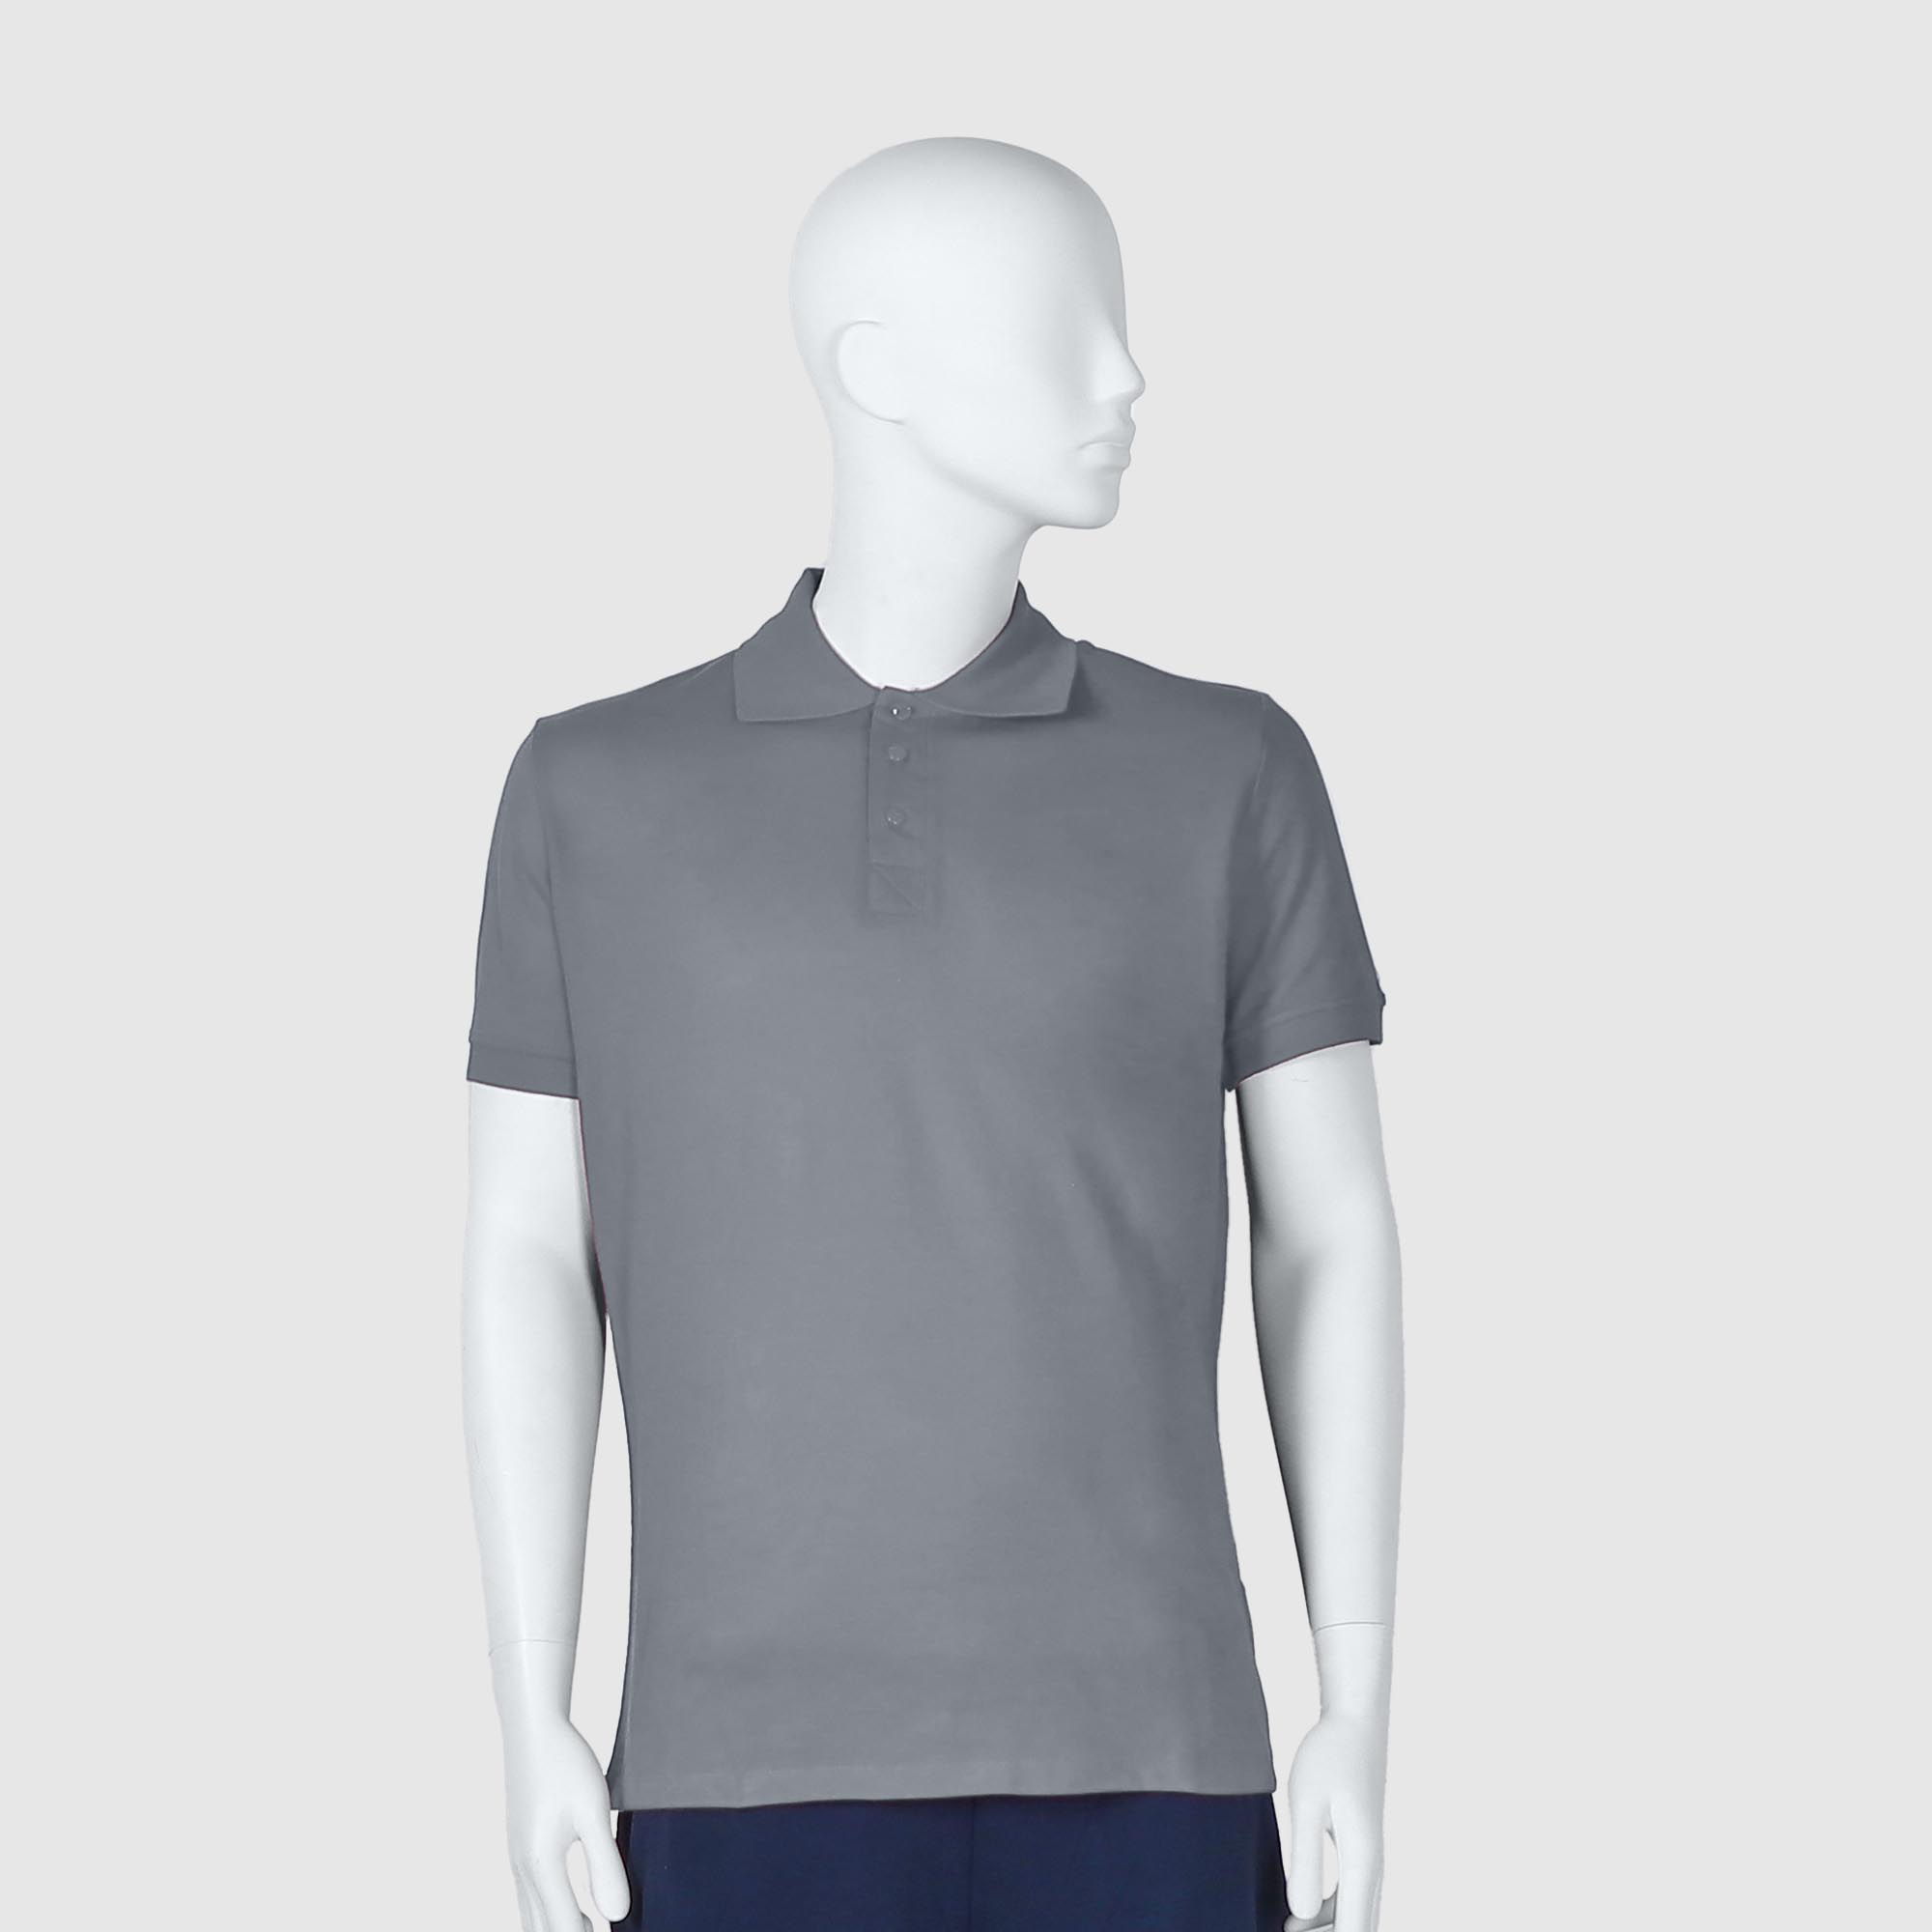 Мужская футболка-поло Diva Teks серая (DTD-11), цвет серый, размер 48-50